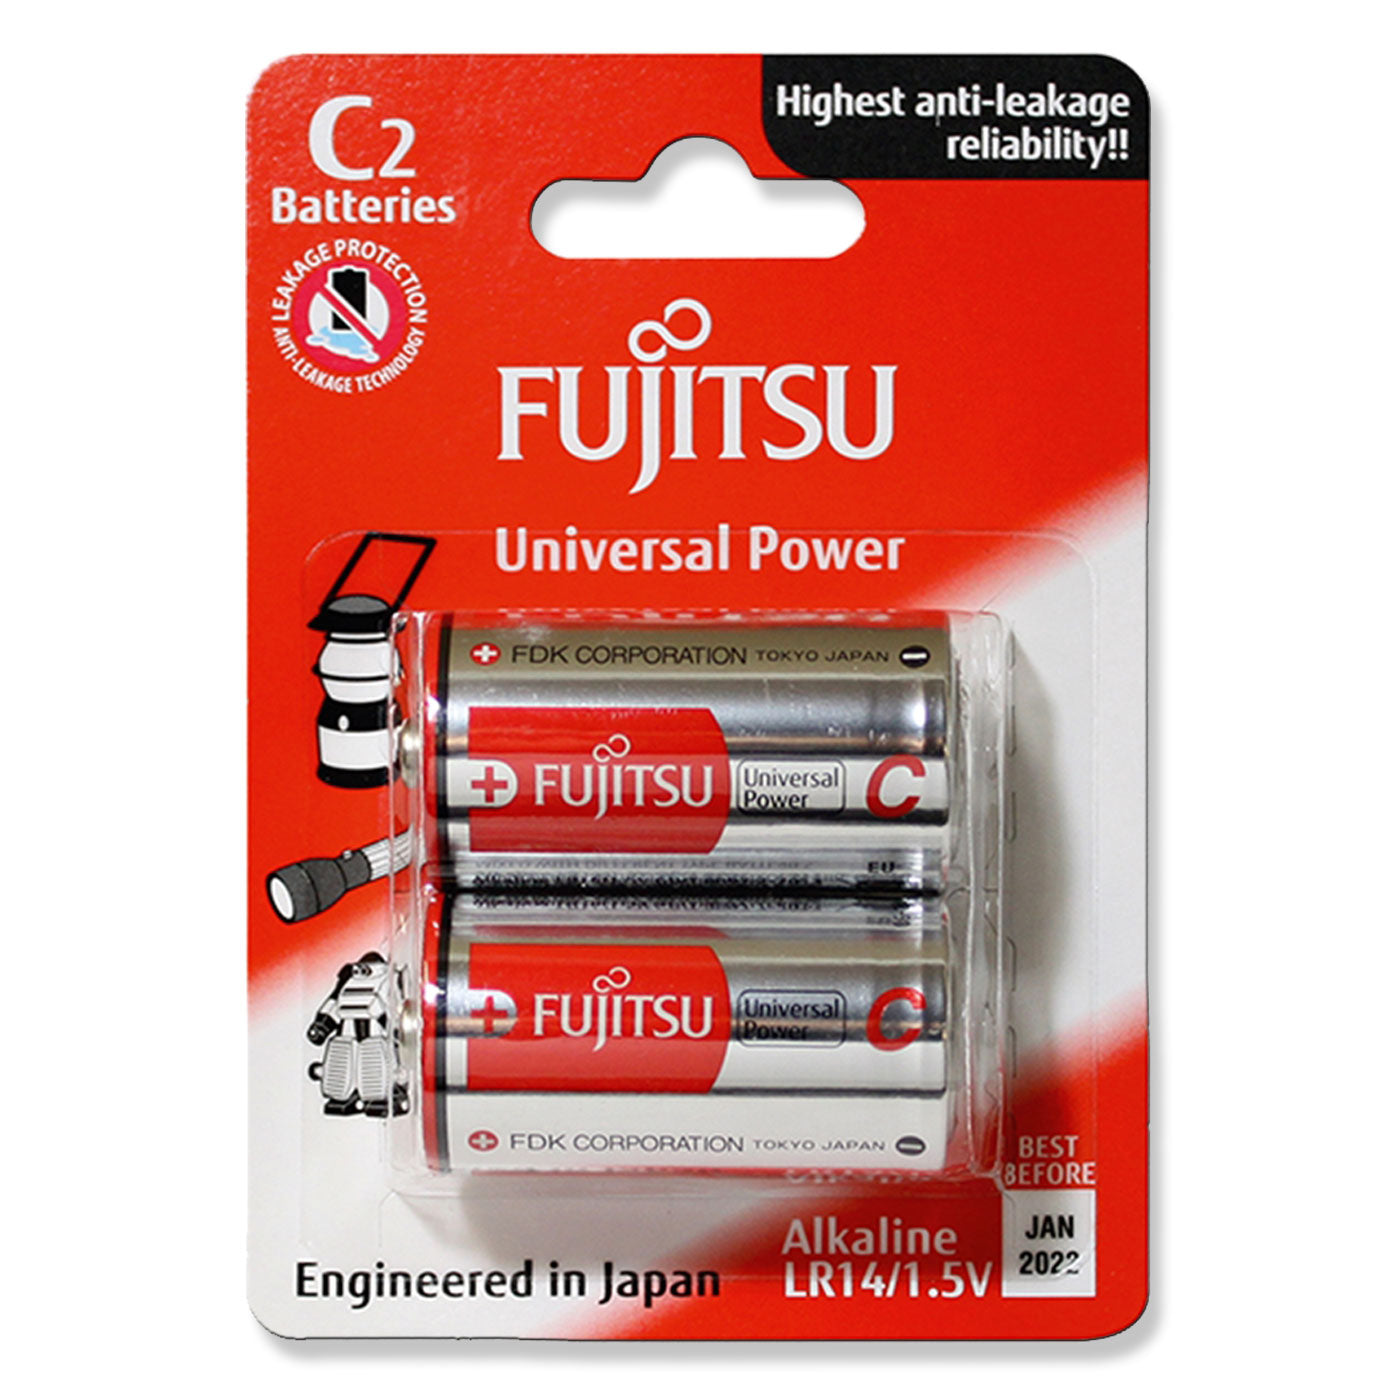 Fujitsu Batteries C Universal Power 2 Pack [1.5 Volt]